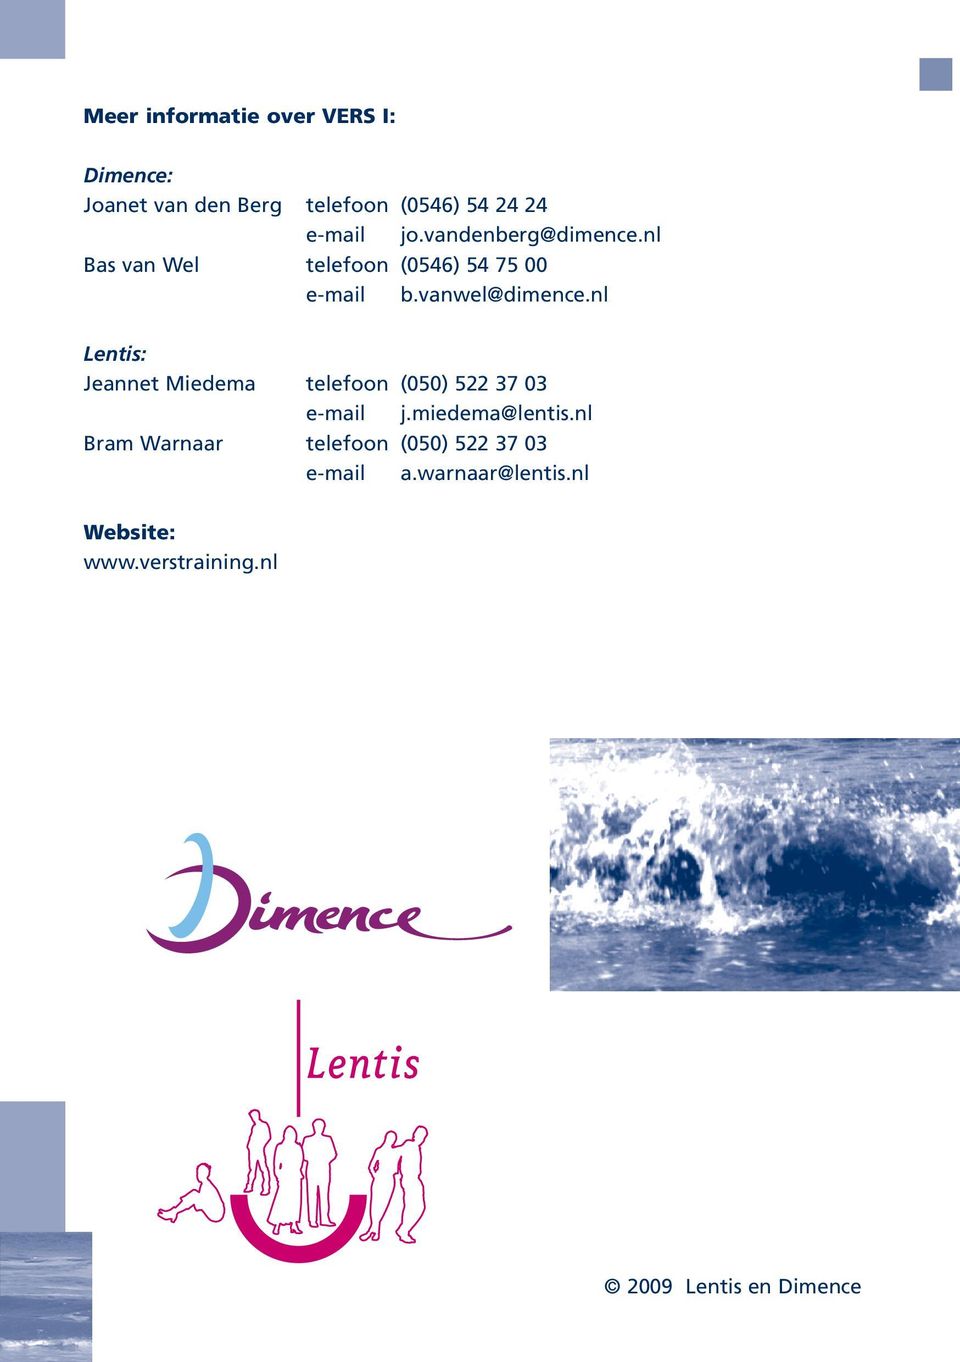 nl Lentis: Jeannet Miedema telefoon (050) 522 37 03 e-mail j.miedema@lentis.